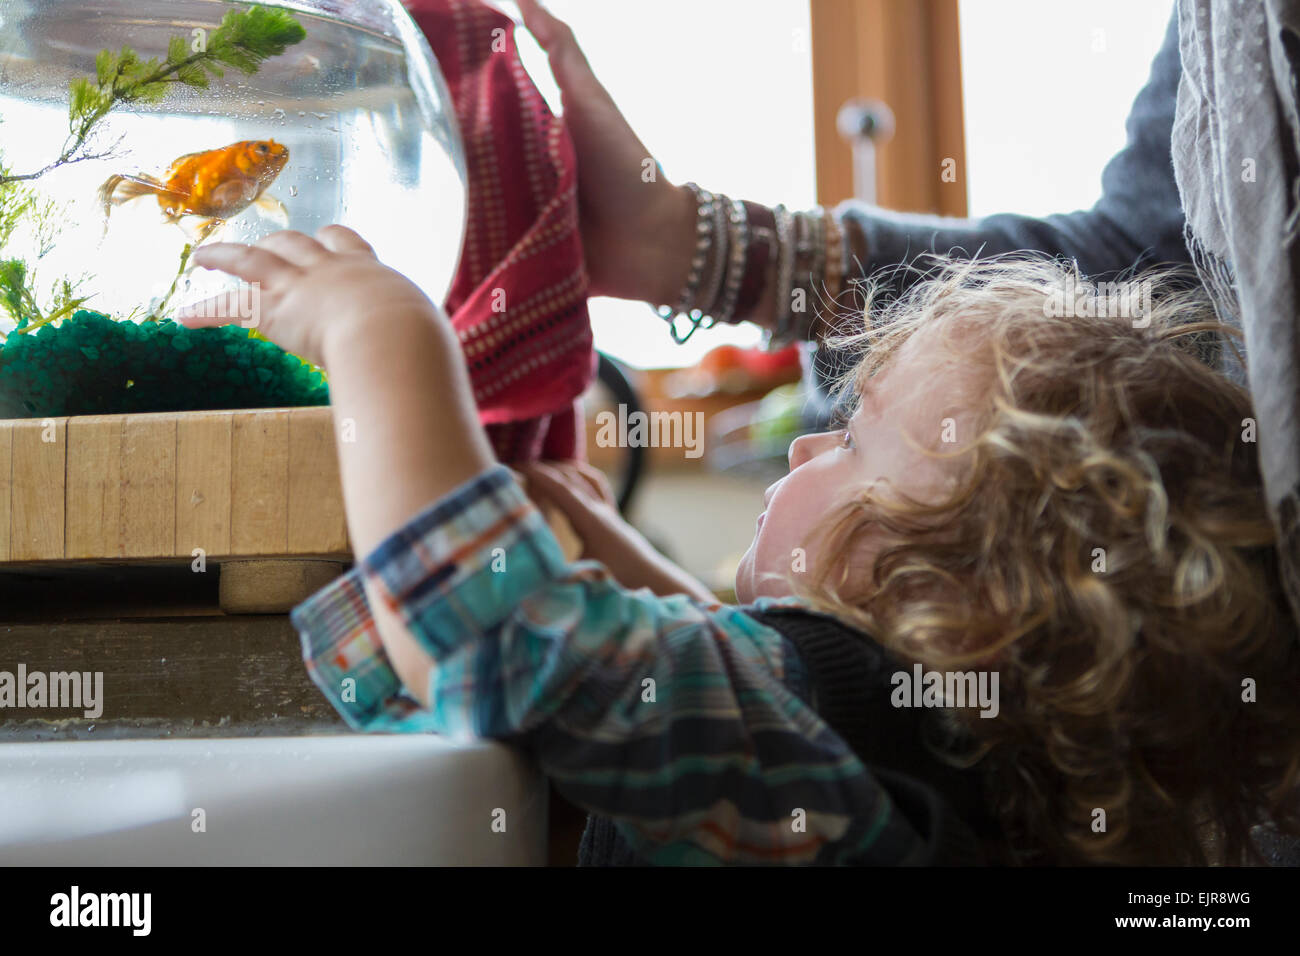 Caucasian mother and baby boy examining fishbowl Stock Photo